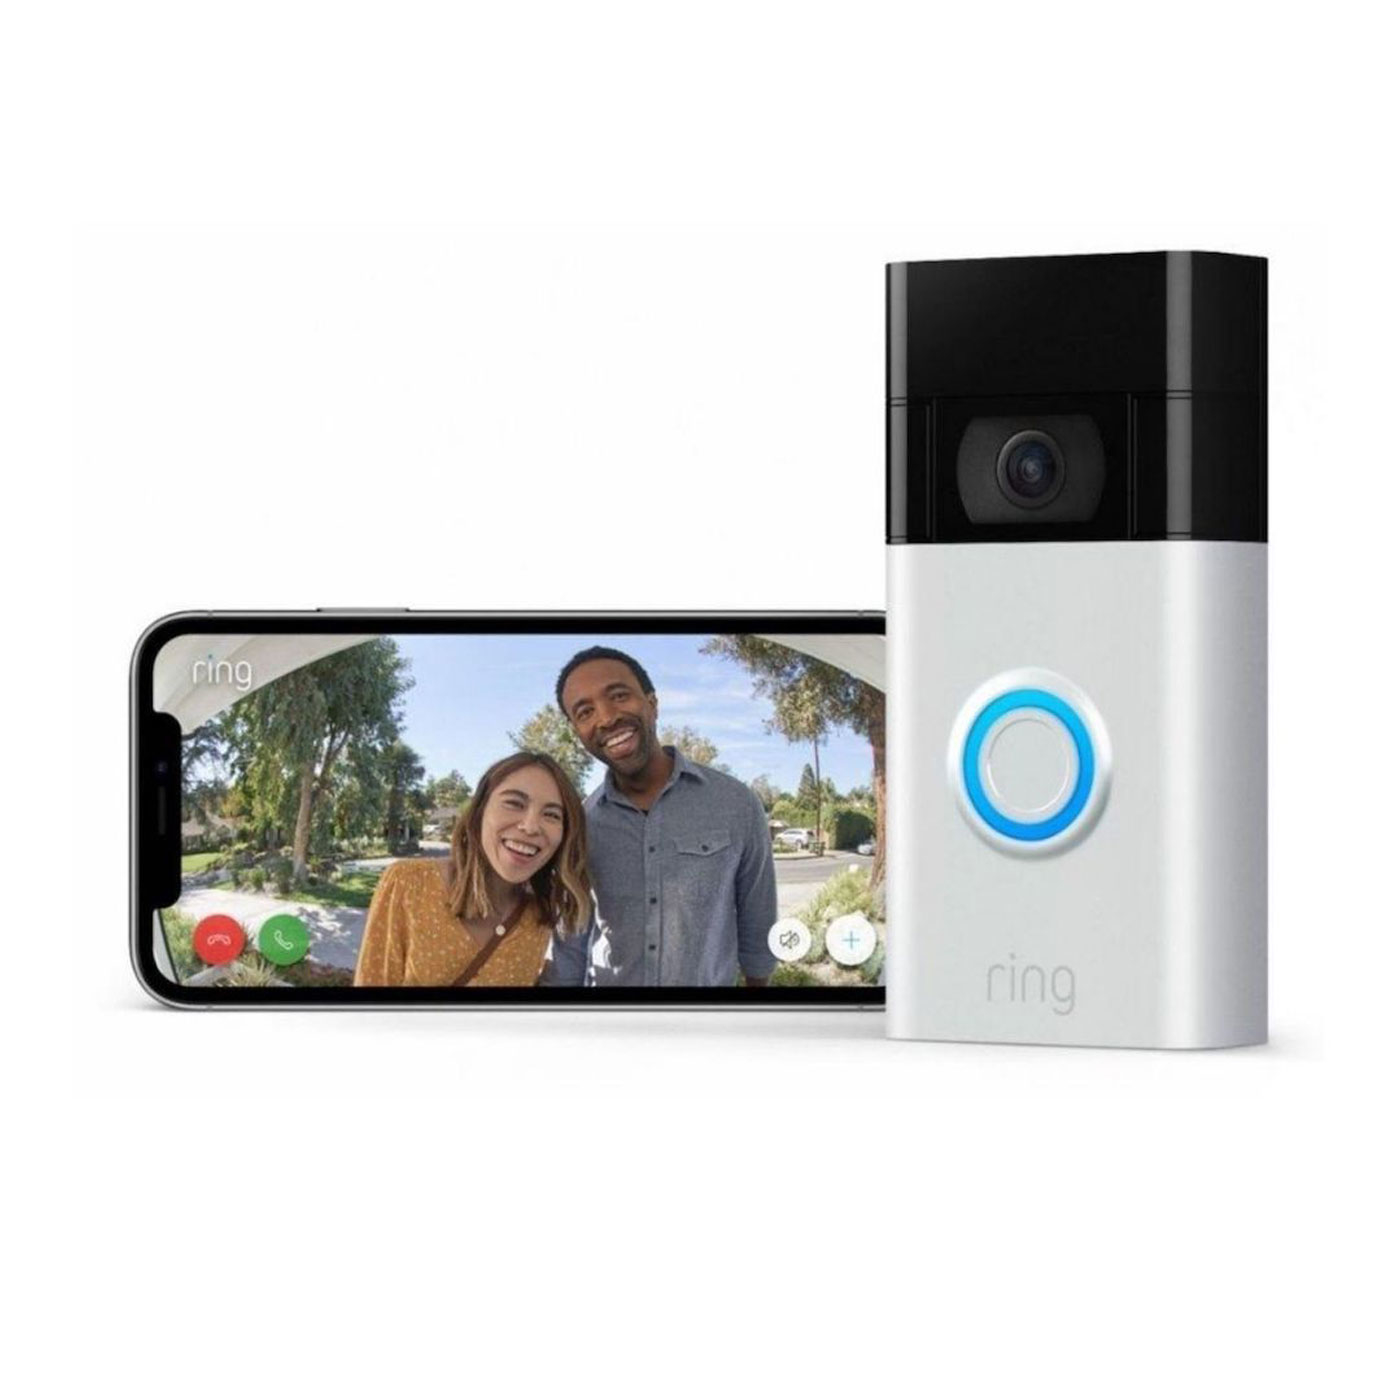 Video Portero con Cámara Integrada RING Inteligente WiFi Dia|Noche 1080p HD Doorbell 1 Plateado